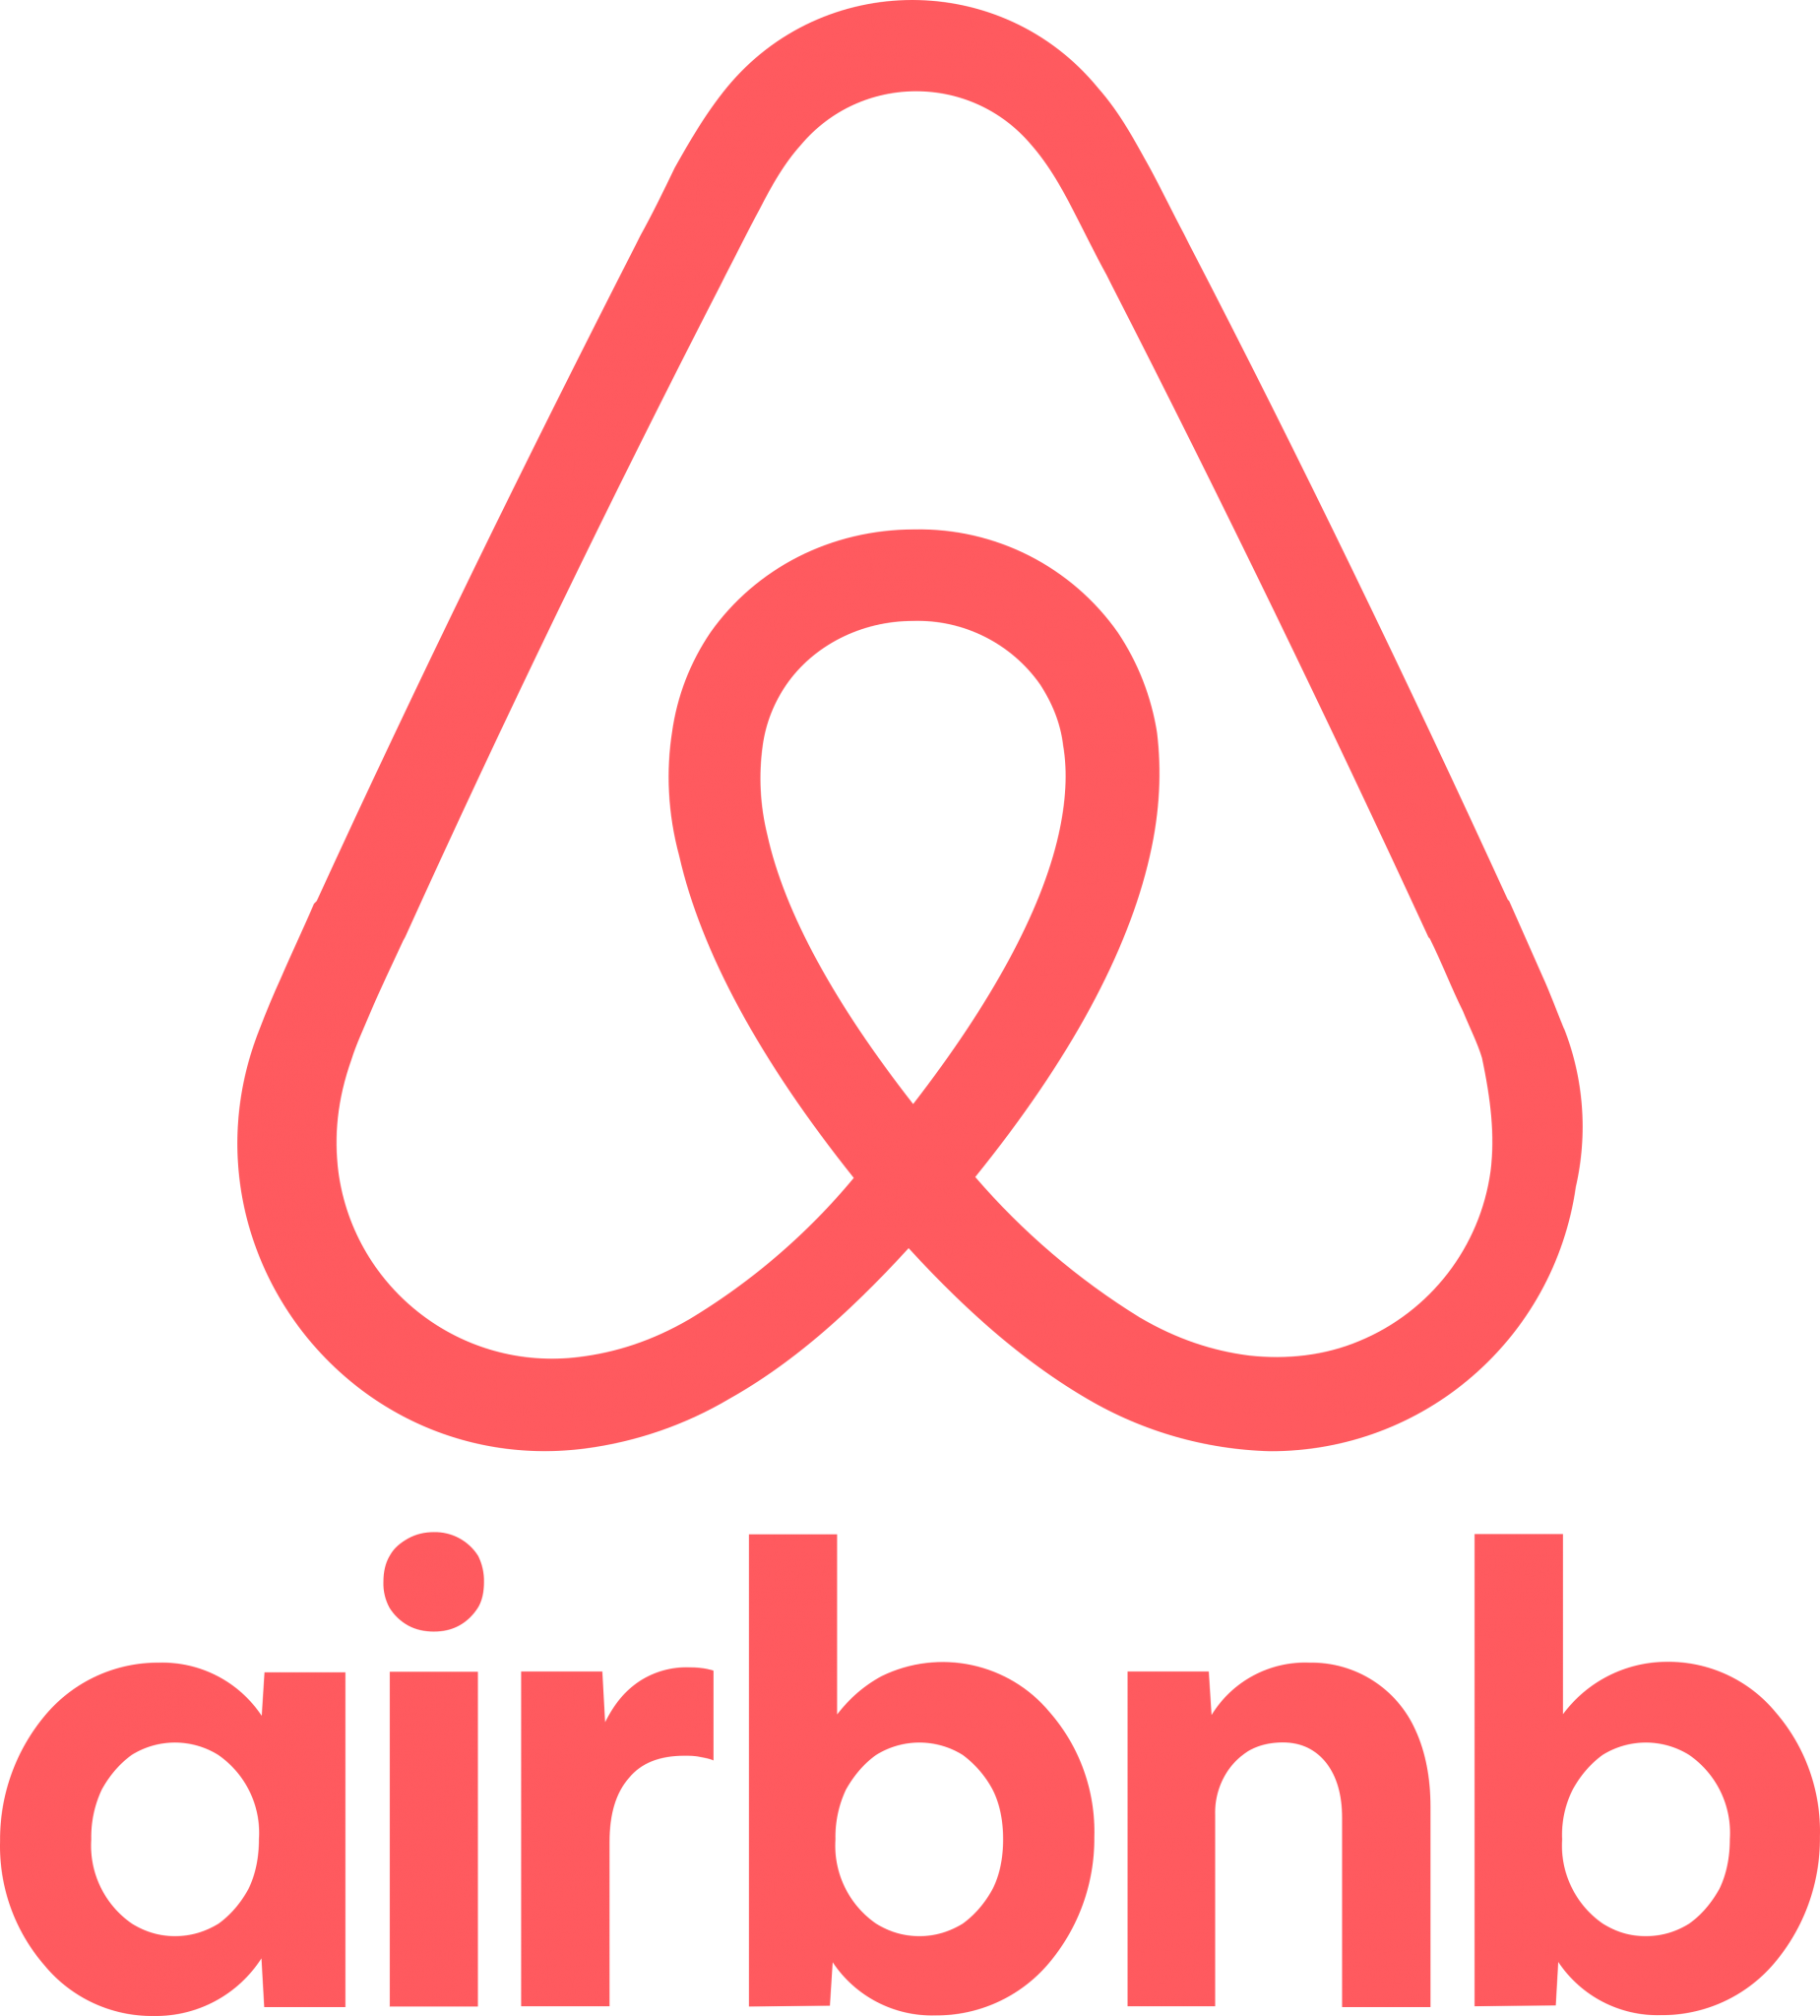 Airbnb Logo - PNG e Vetor - Download de Logo